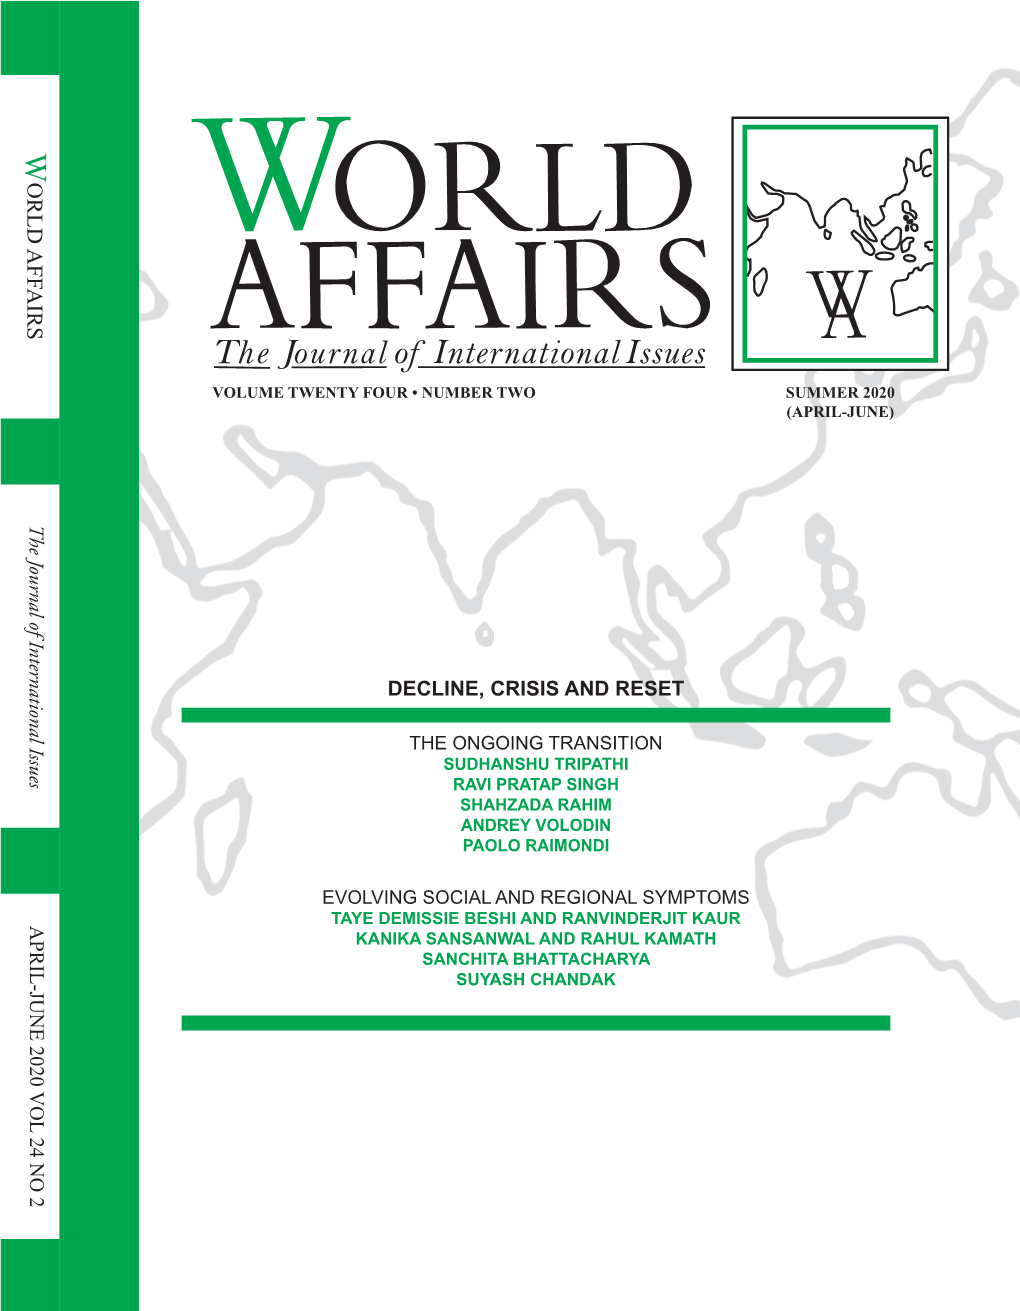 World Affairs Summer 2020 (April – June) Vol 24 No 2 1 2 World Affairs Summer 2020 (April – June) Vol 24 No 2 World Affairs International Advisory Board